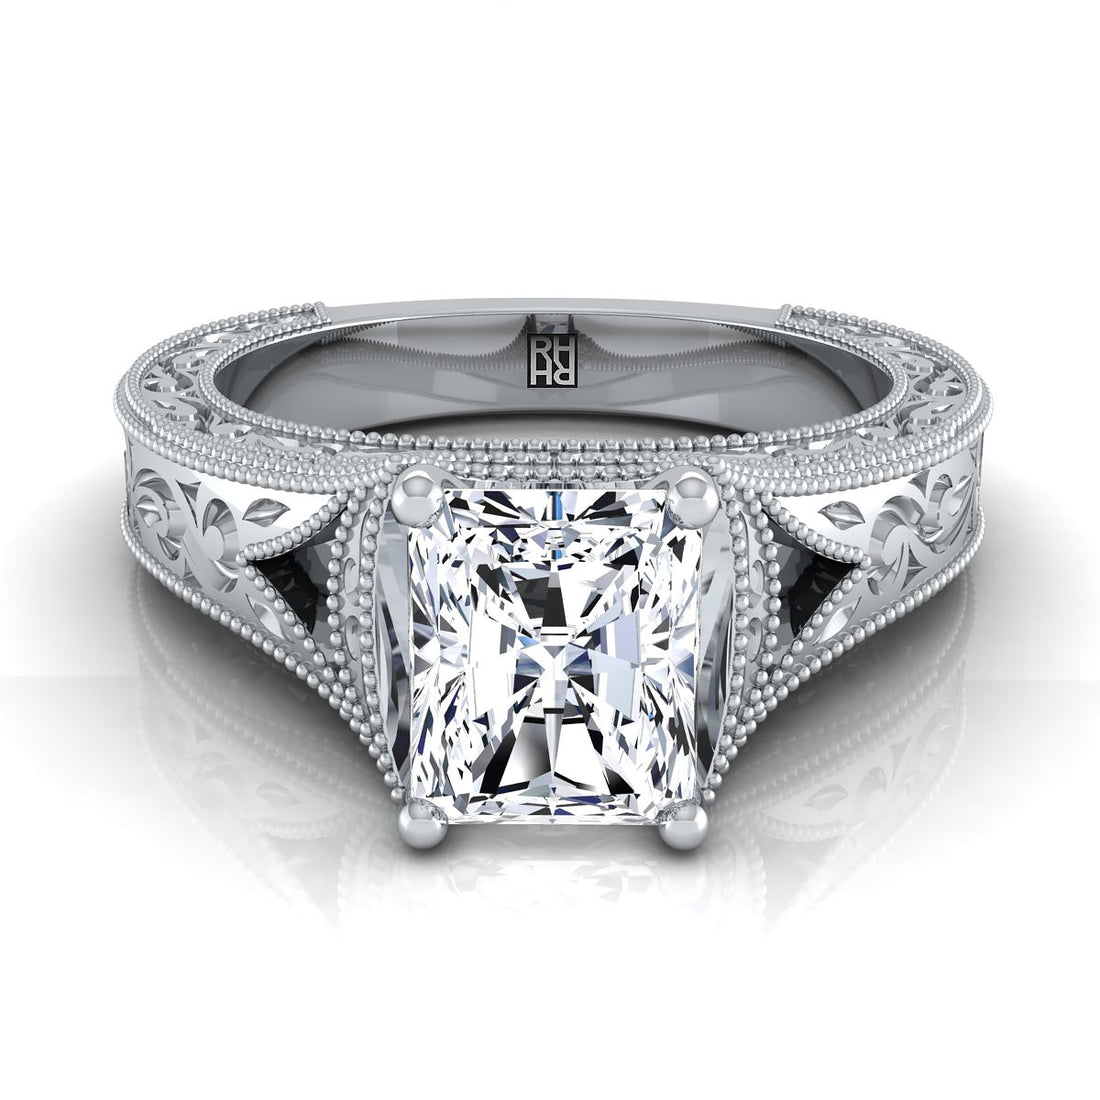 What are Diamond Filigree Rings?